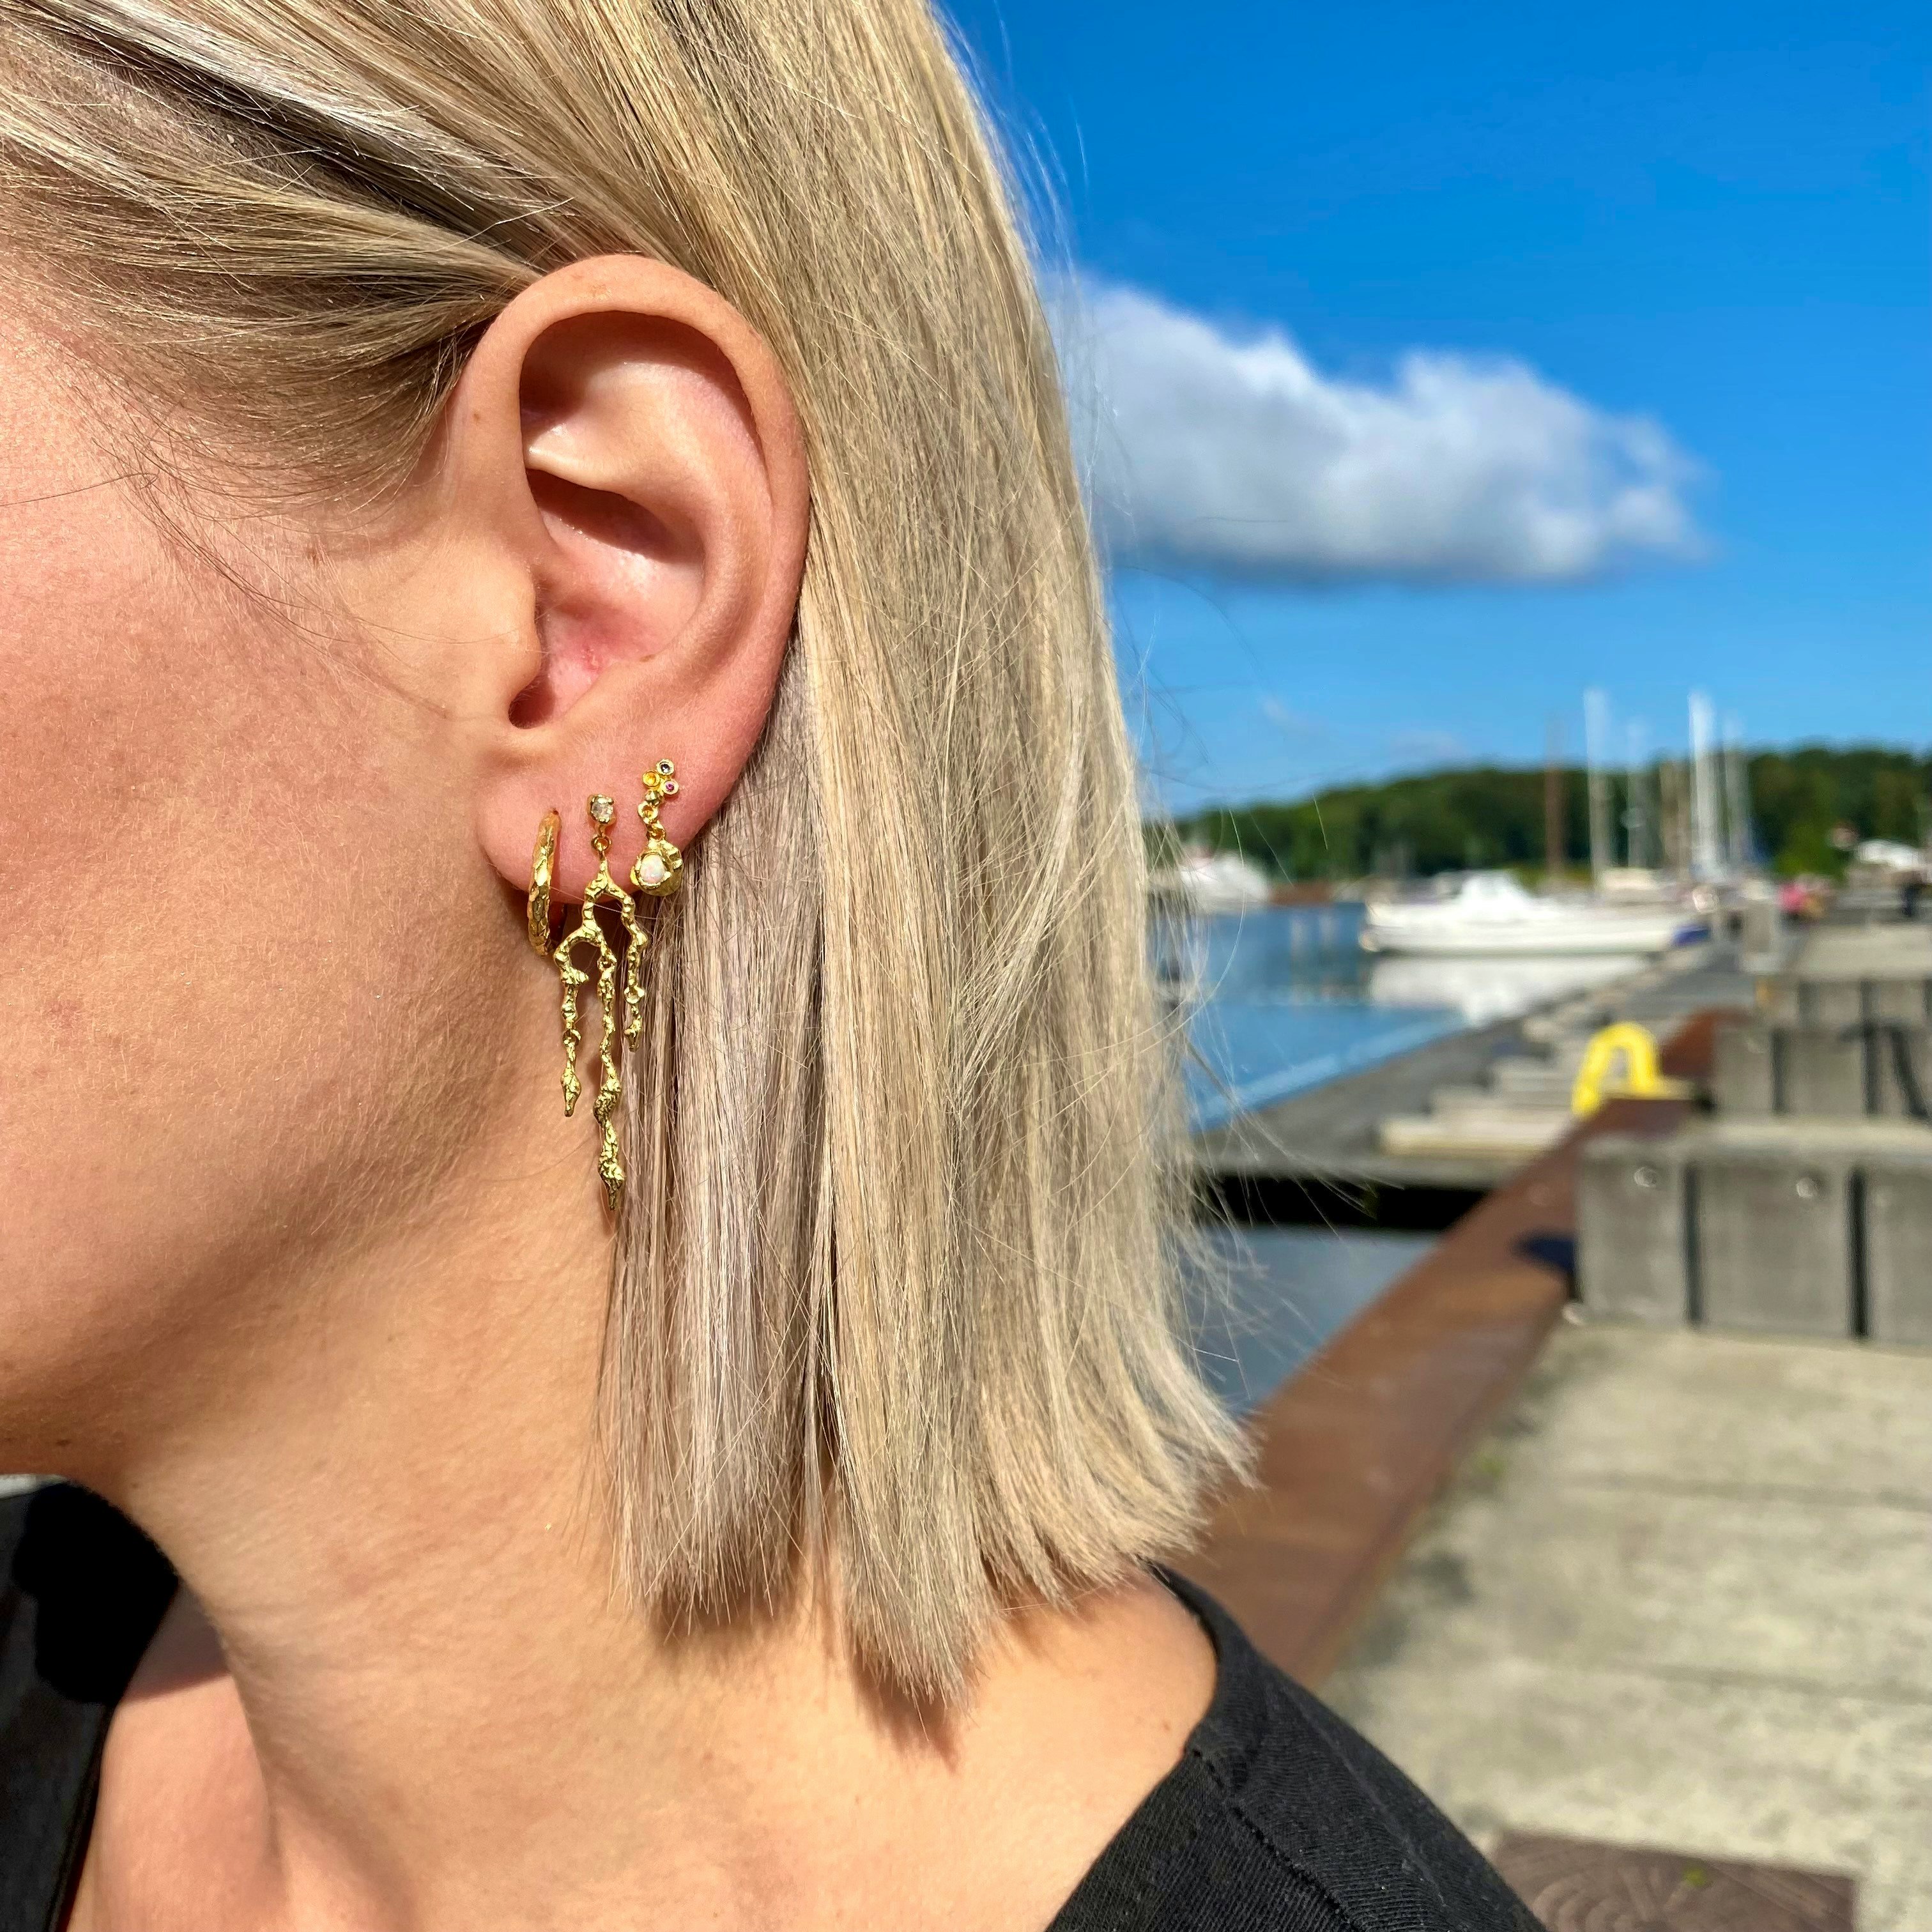 Ina Big earrings von Maanesten in Silber Sterling 925